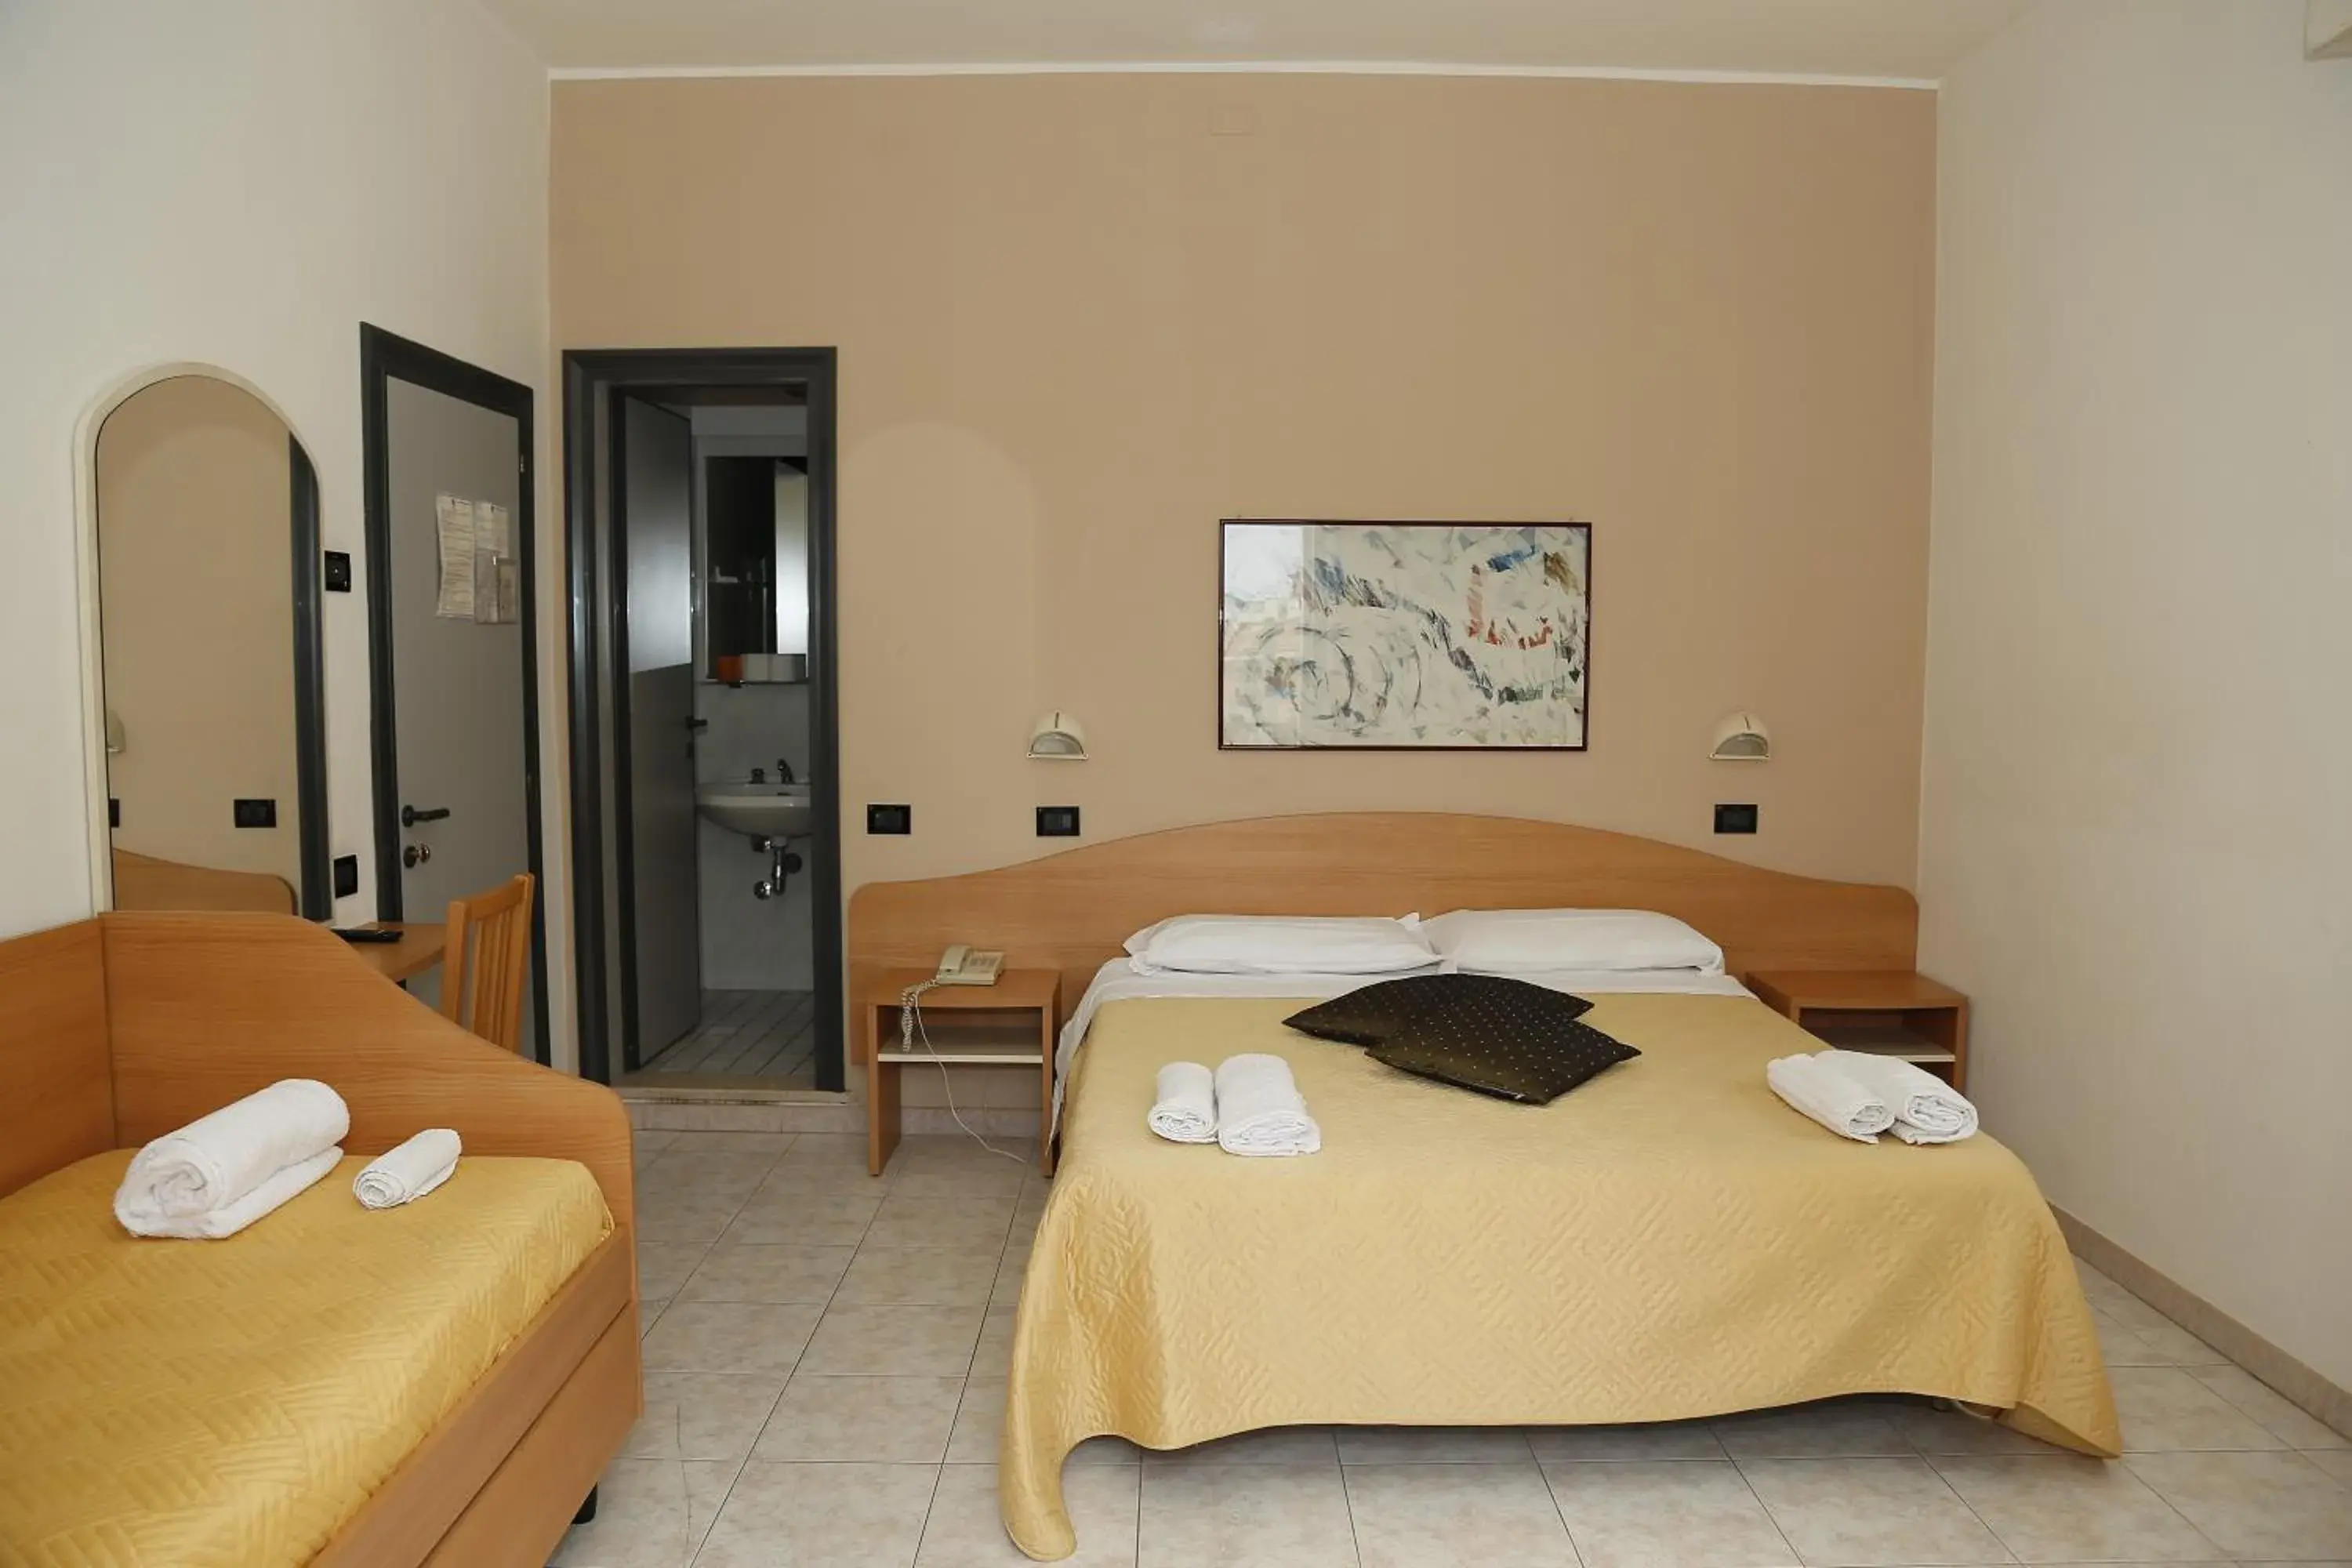 Bedroom, Room Photo in Hotel Villa Dina